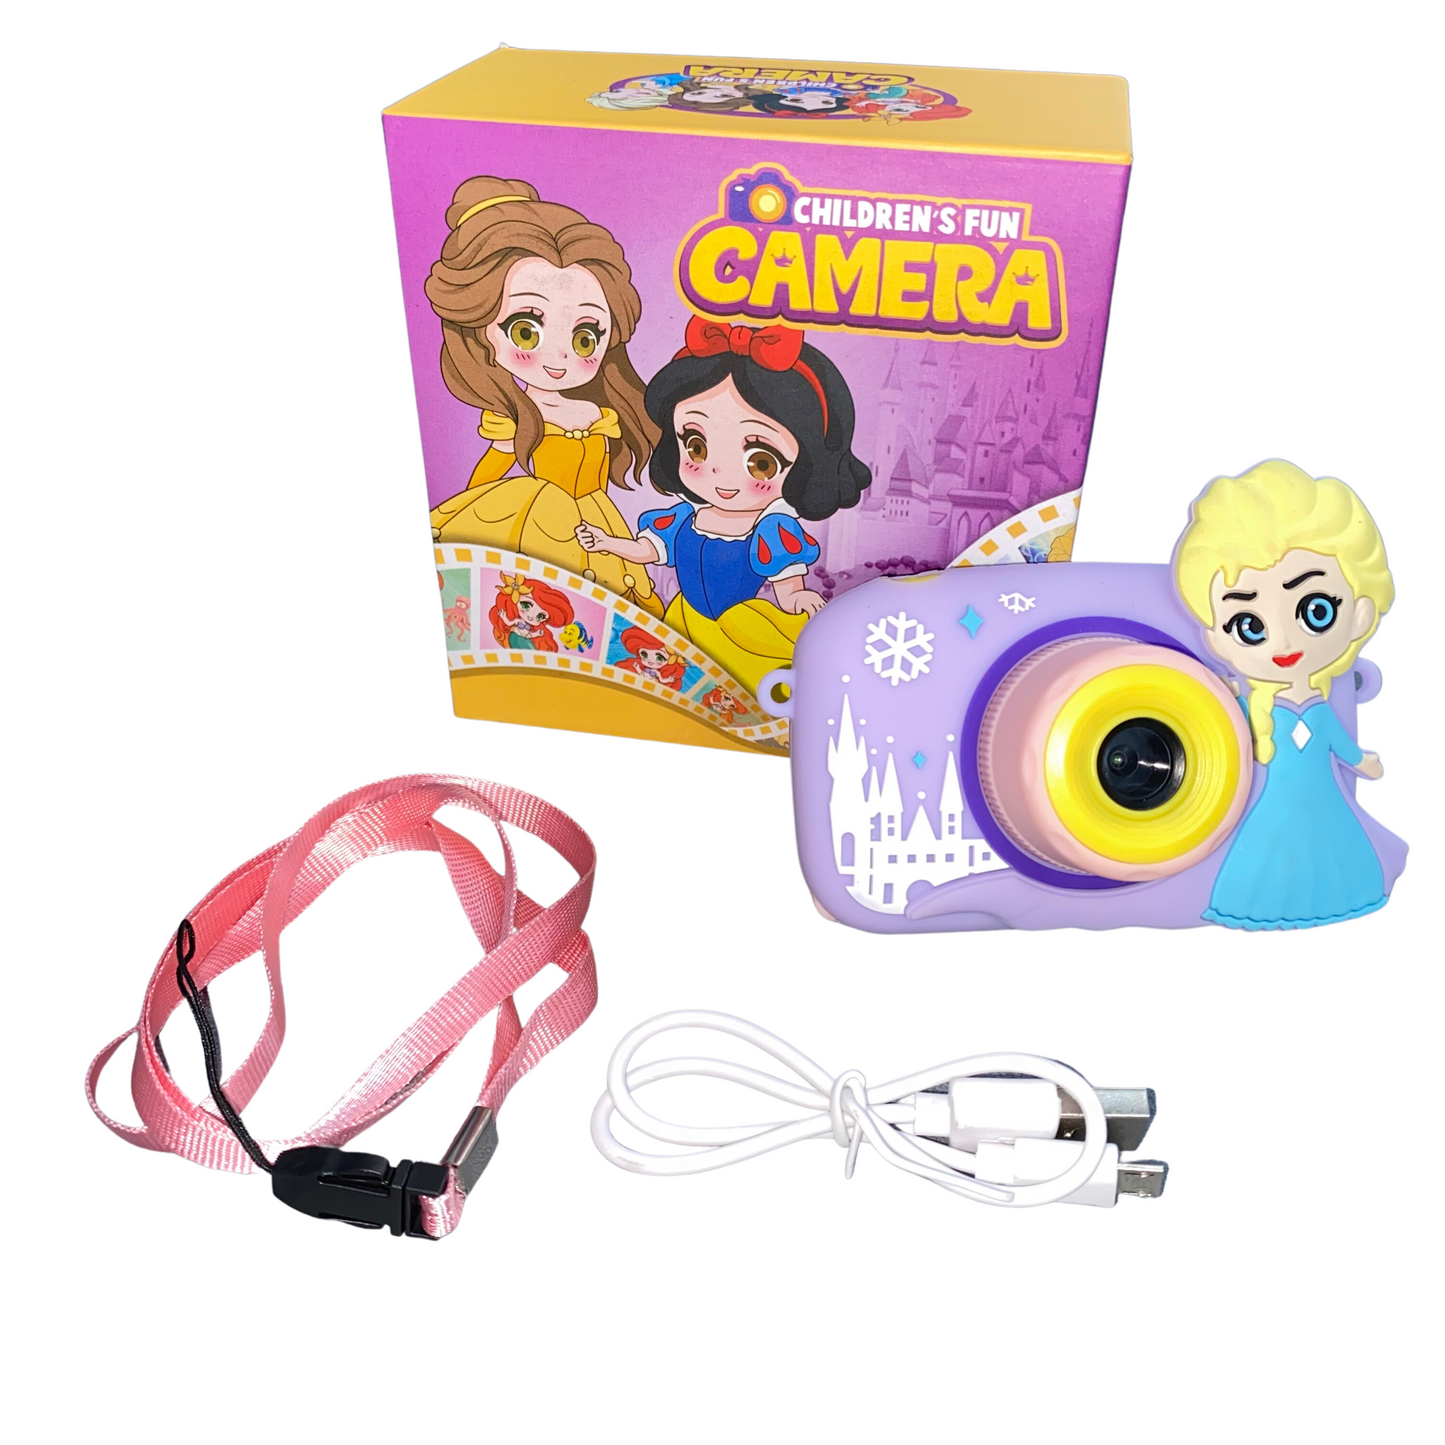 Digital Camera for Girls